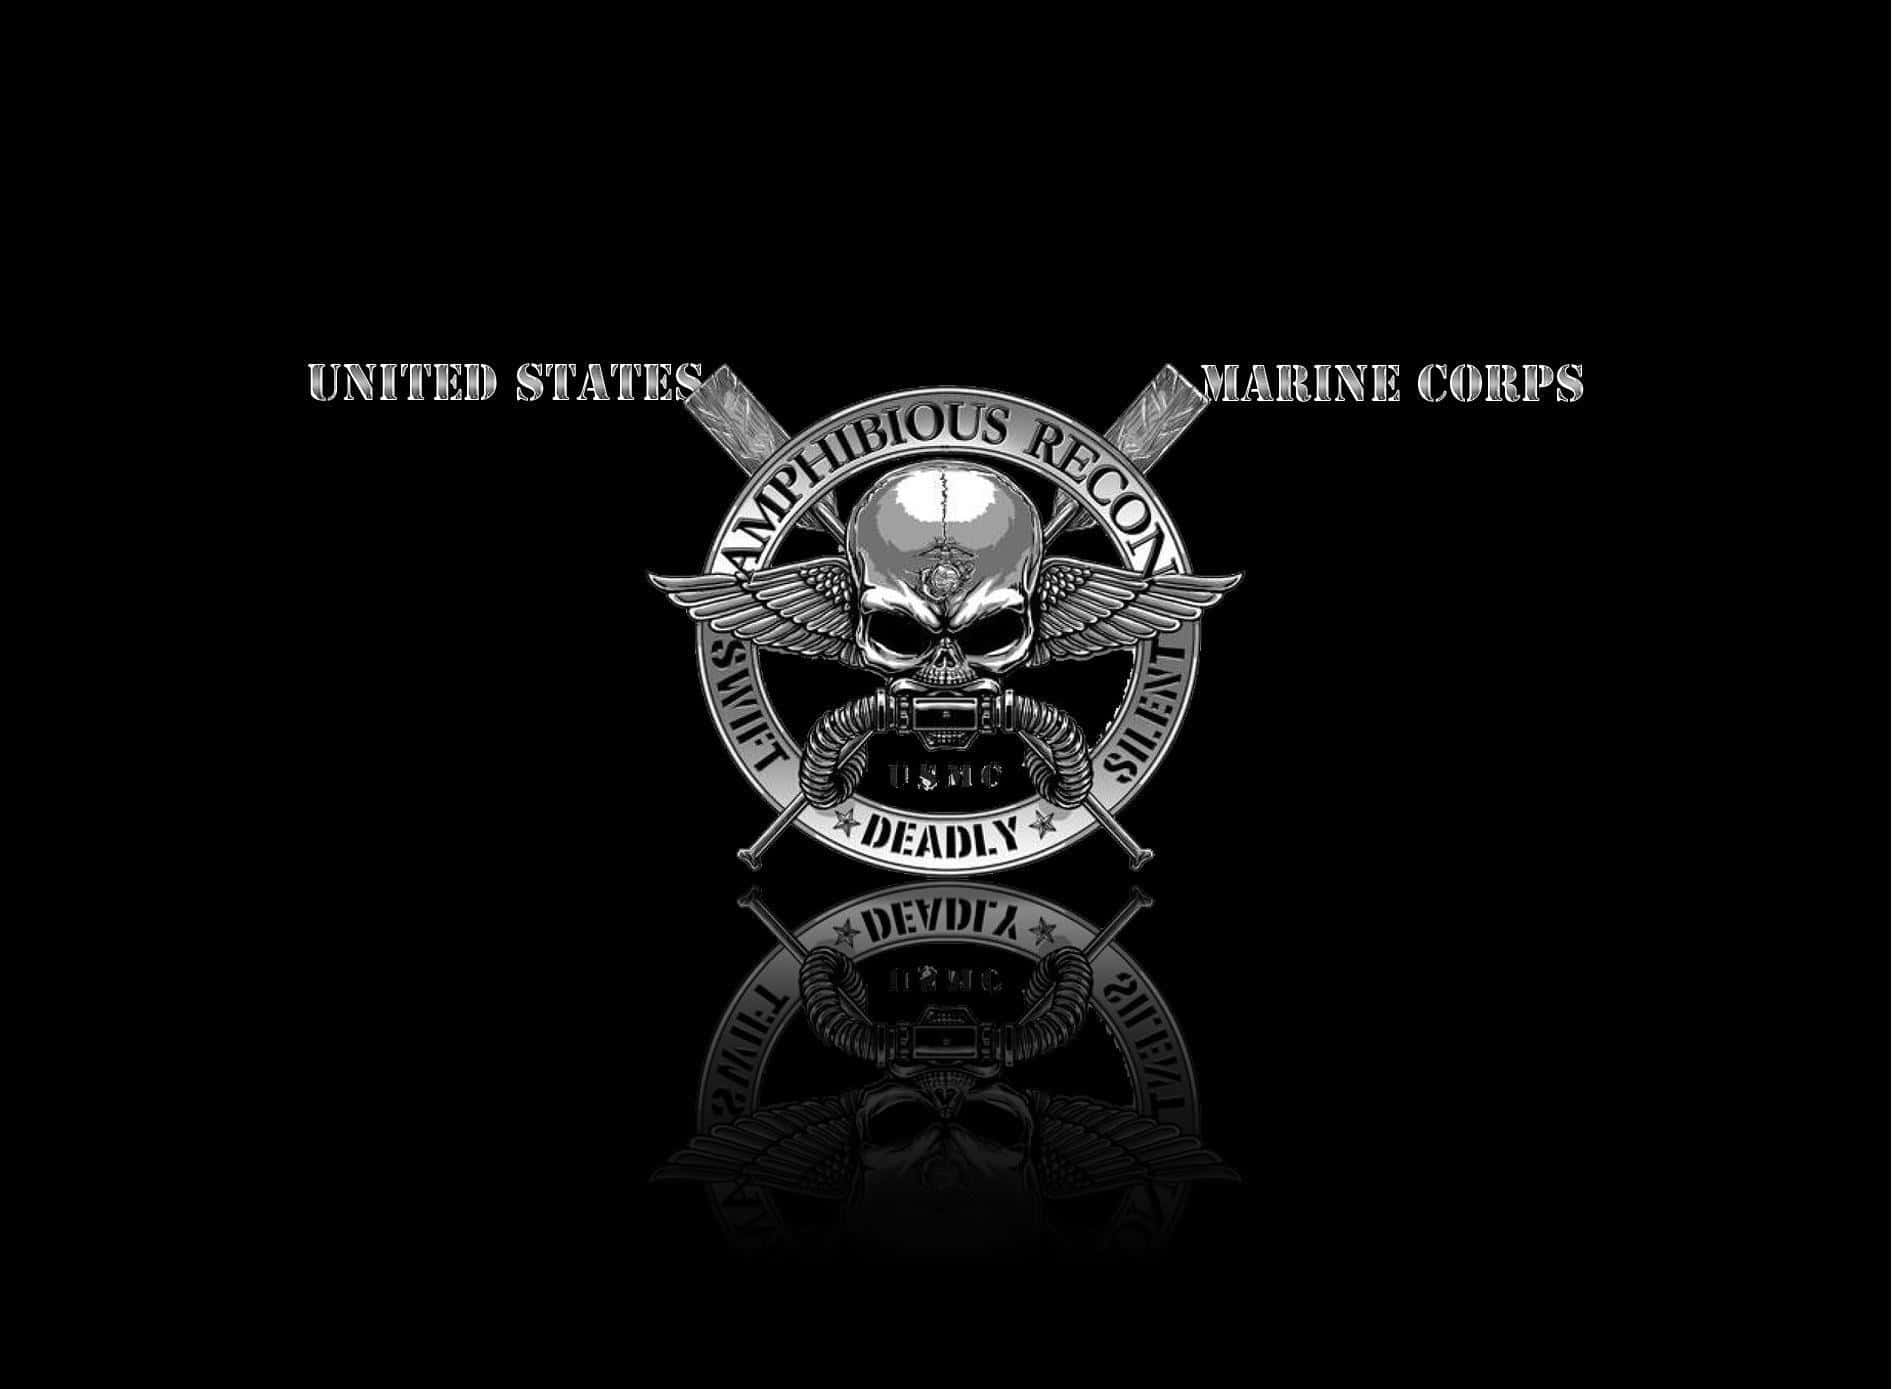 Semper Fi! Proud members of the U.S. Marine Corps Wallpaper